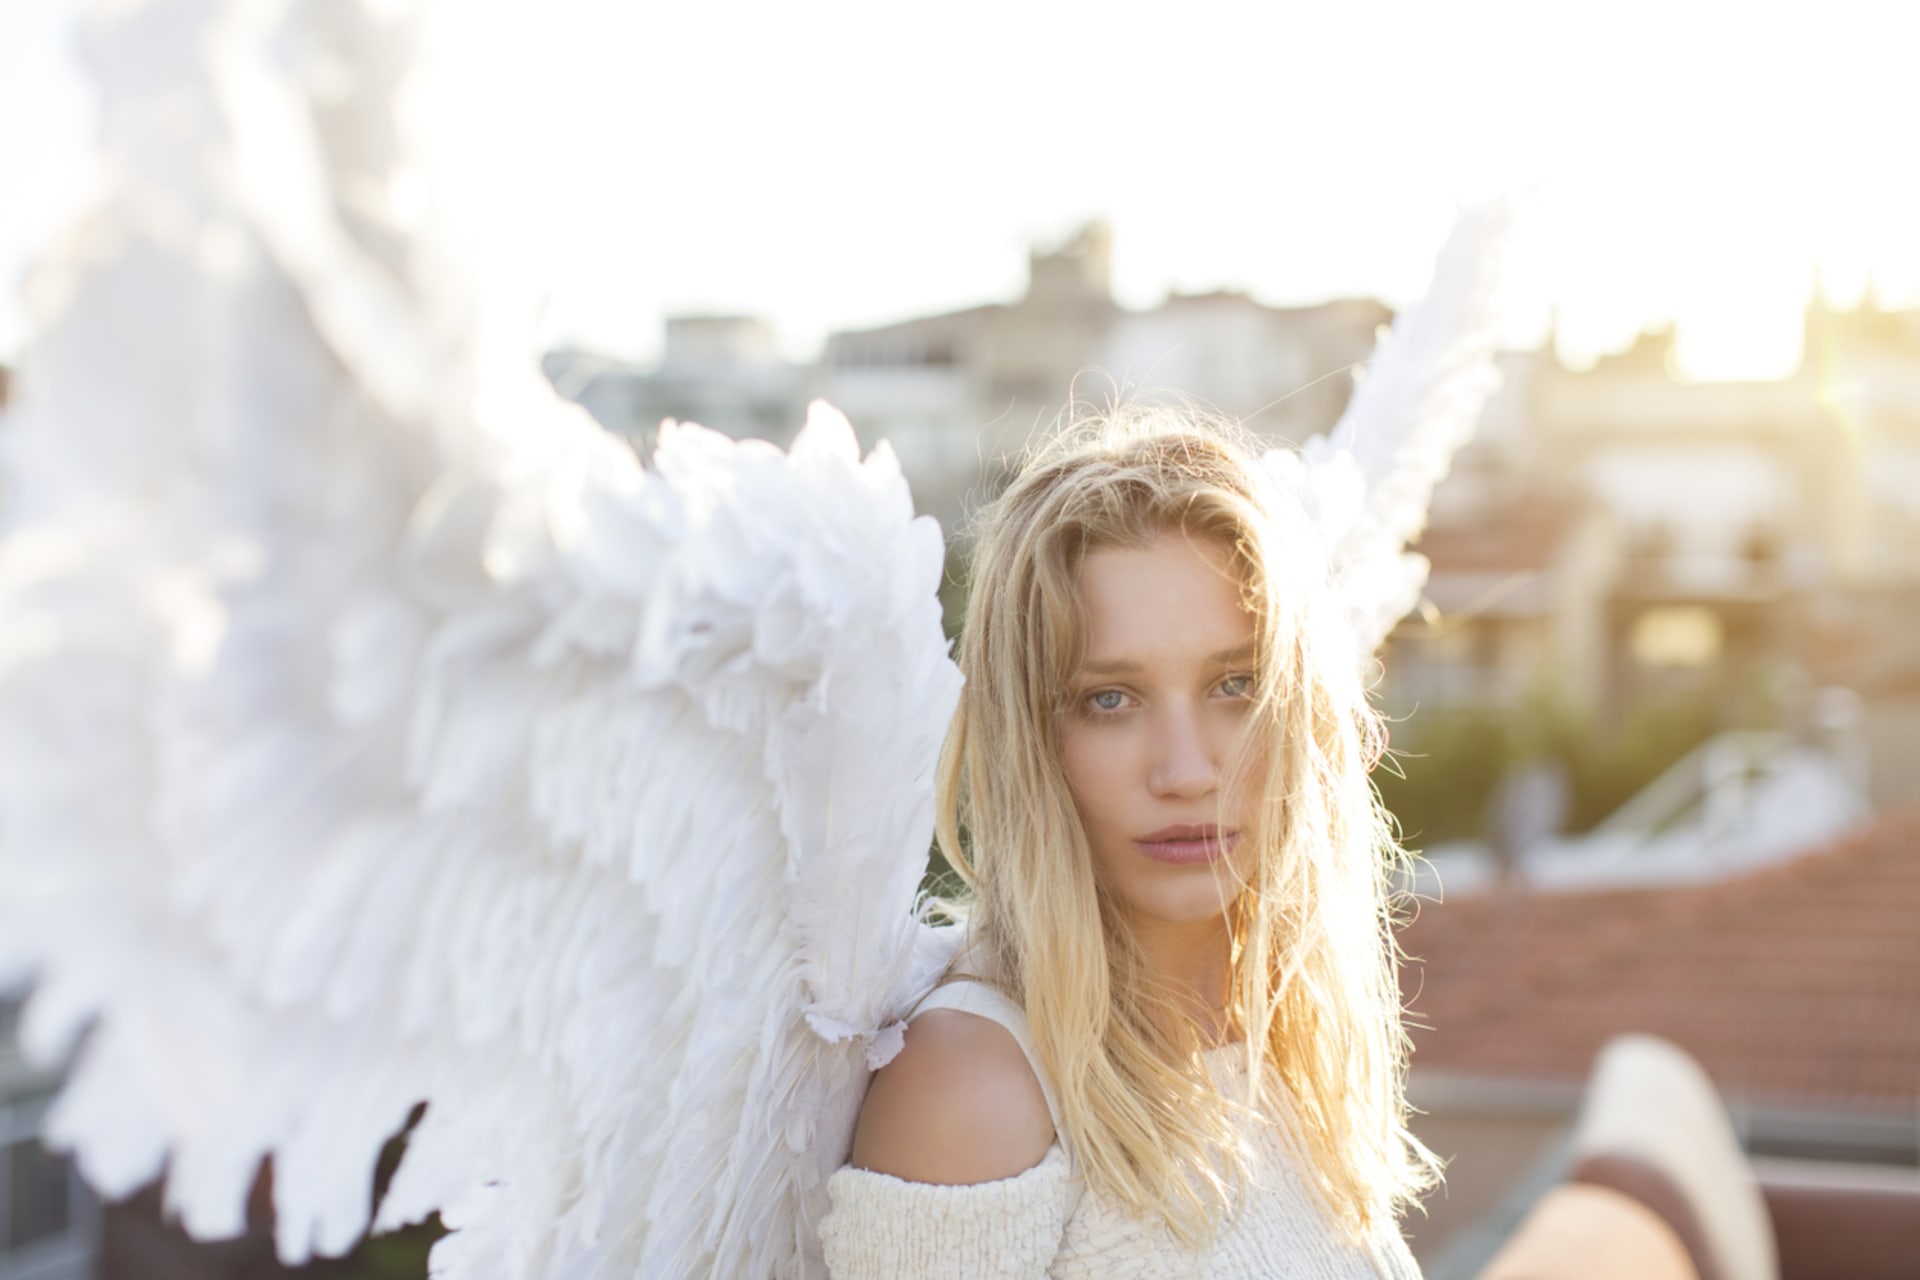 Panna je jako anděl